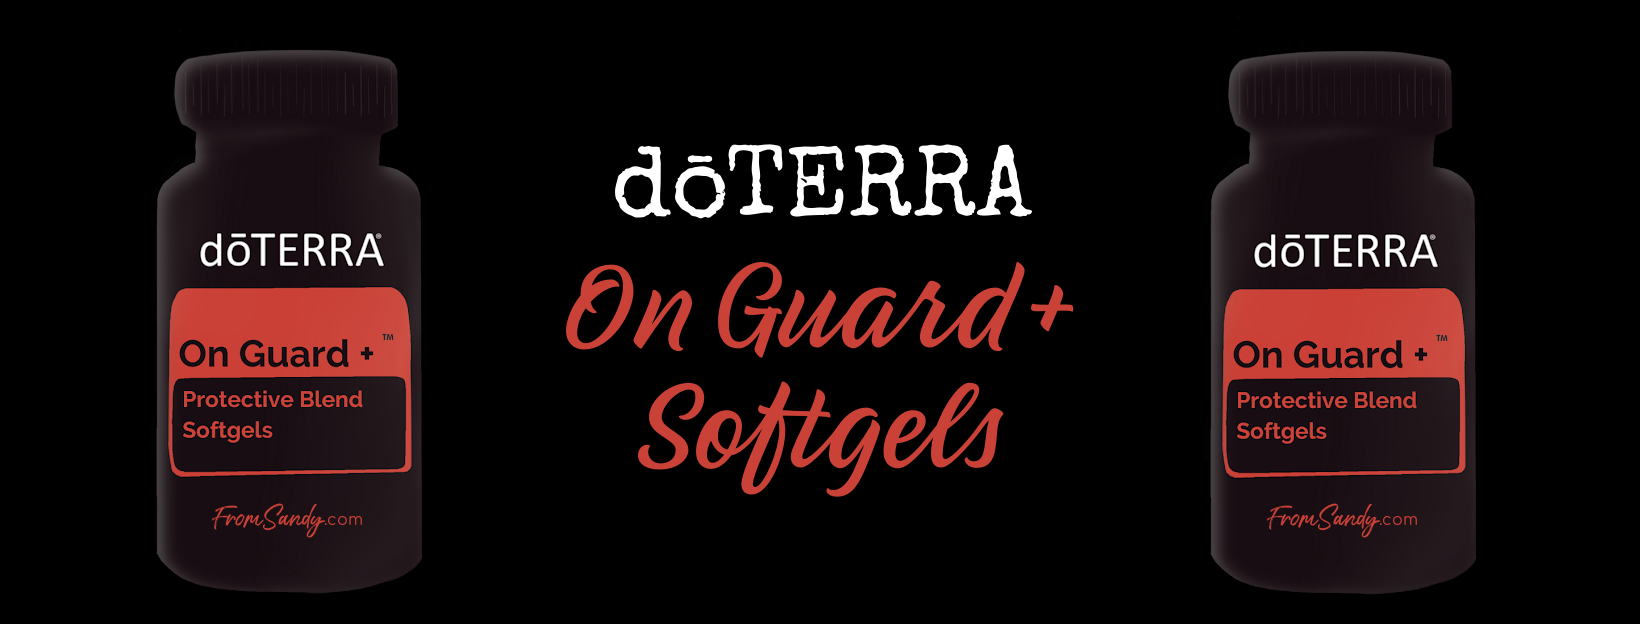 dōTERRA On Guard+ Softgels | From Sandy